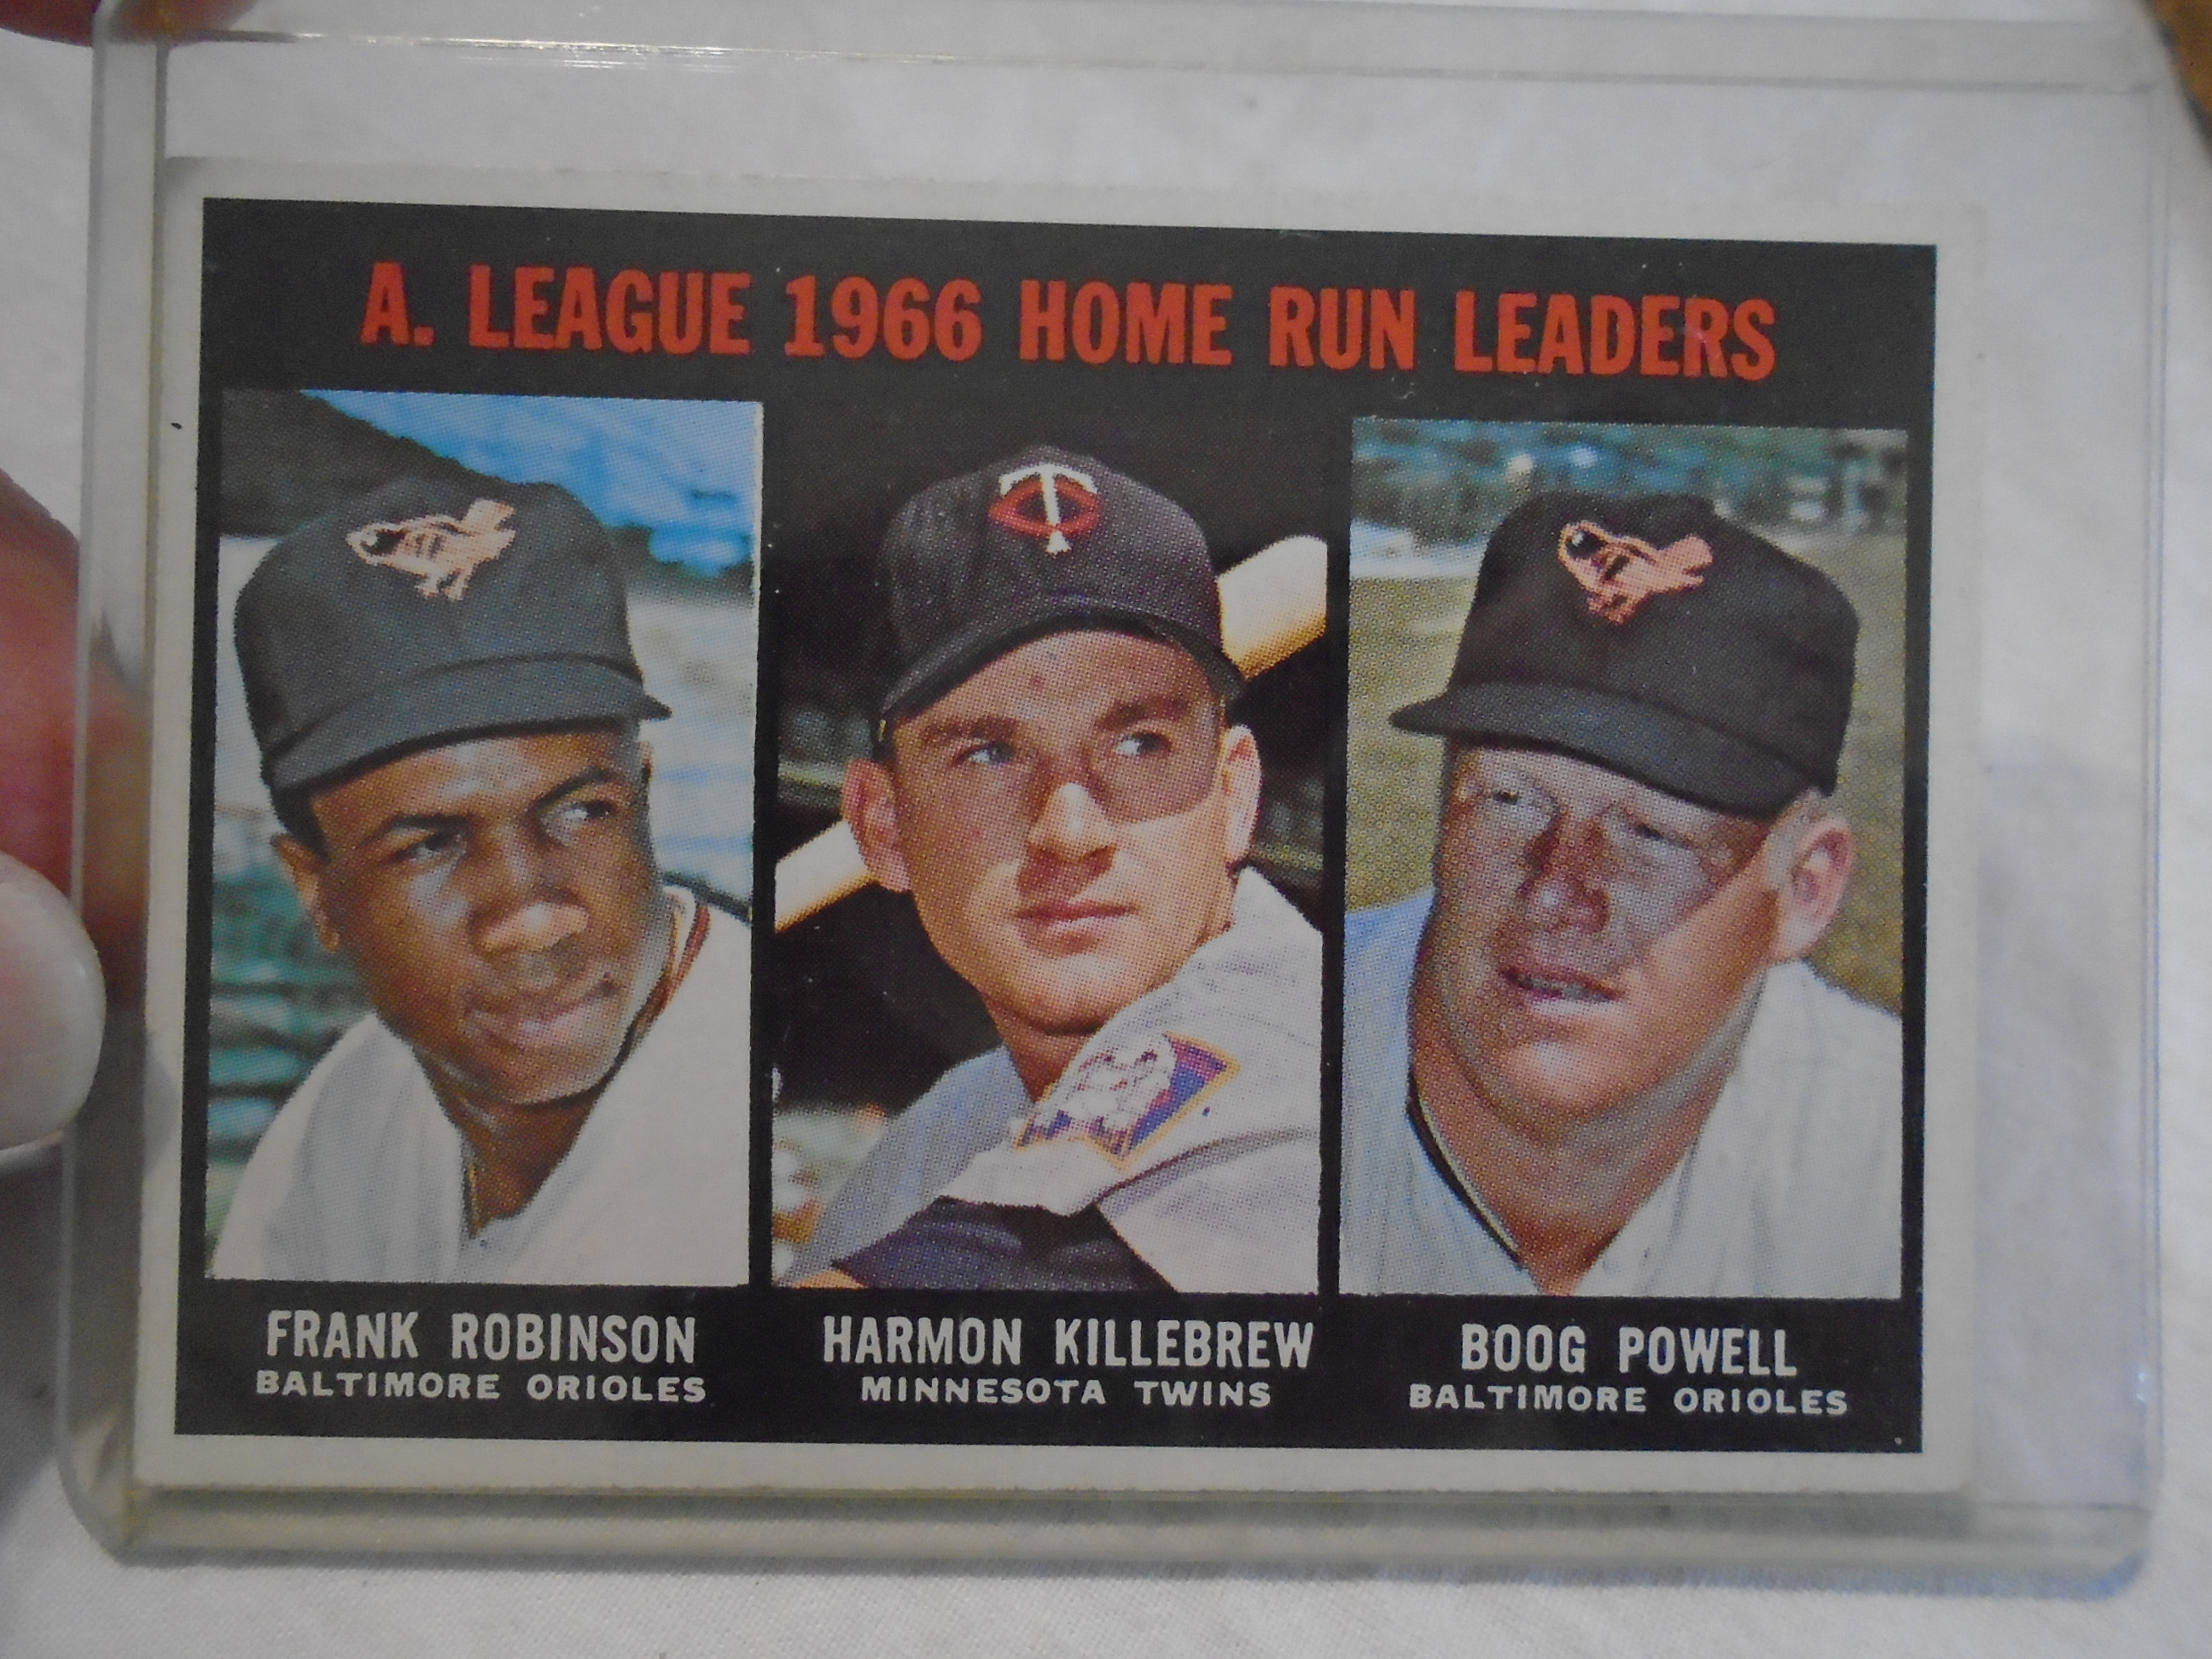 1966 home run leaders Frank Robinson, Harmon Killebrew, Boog Powell